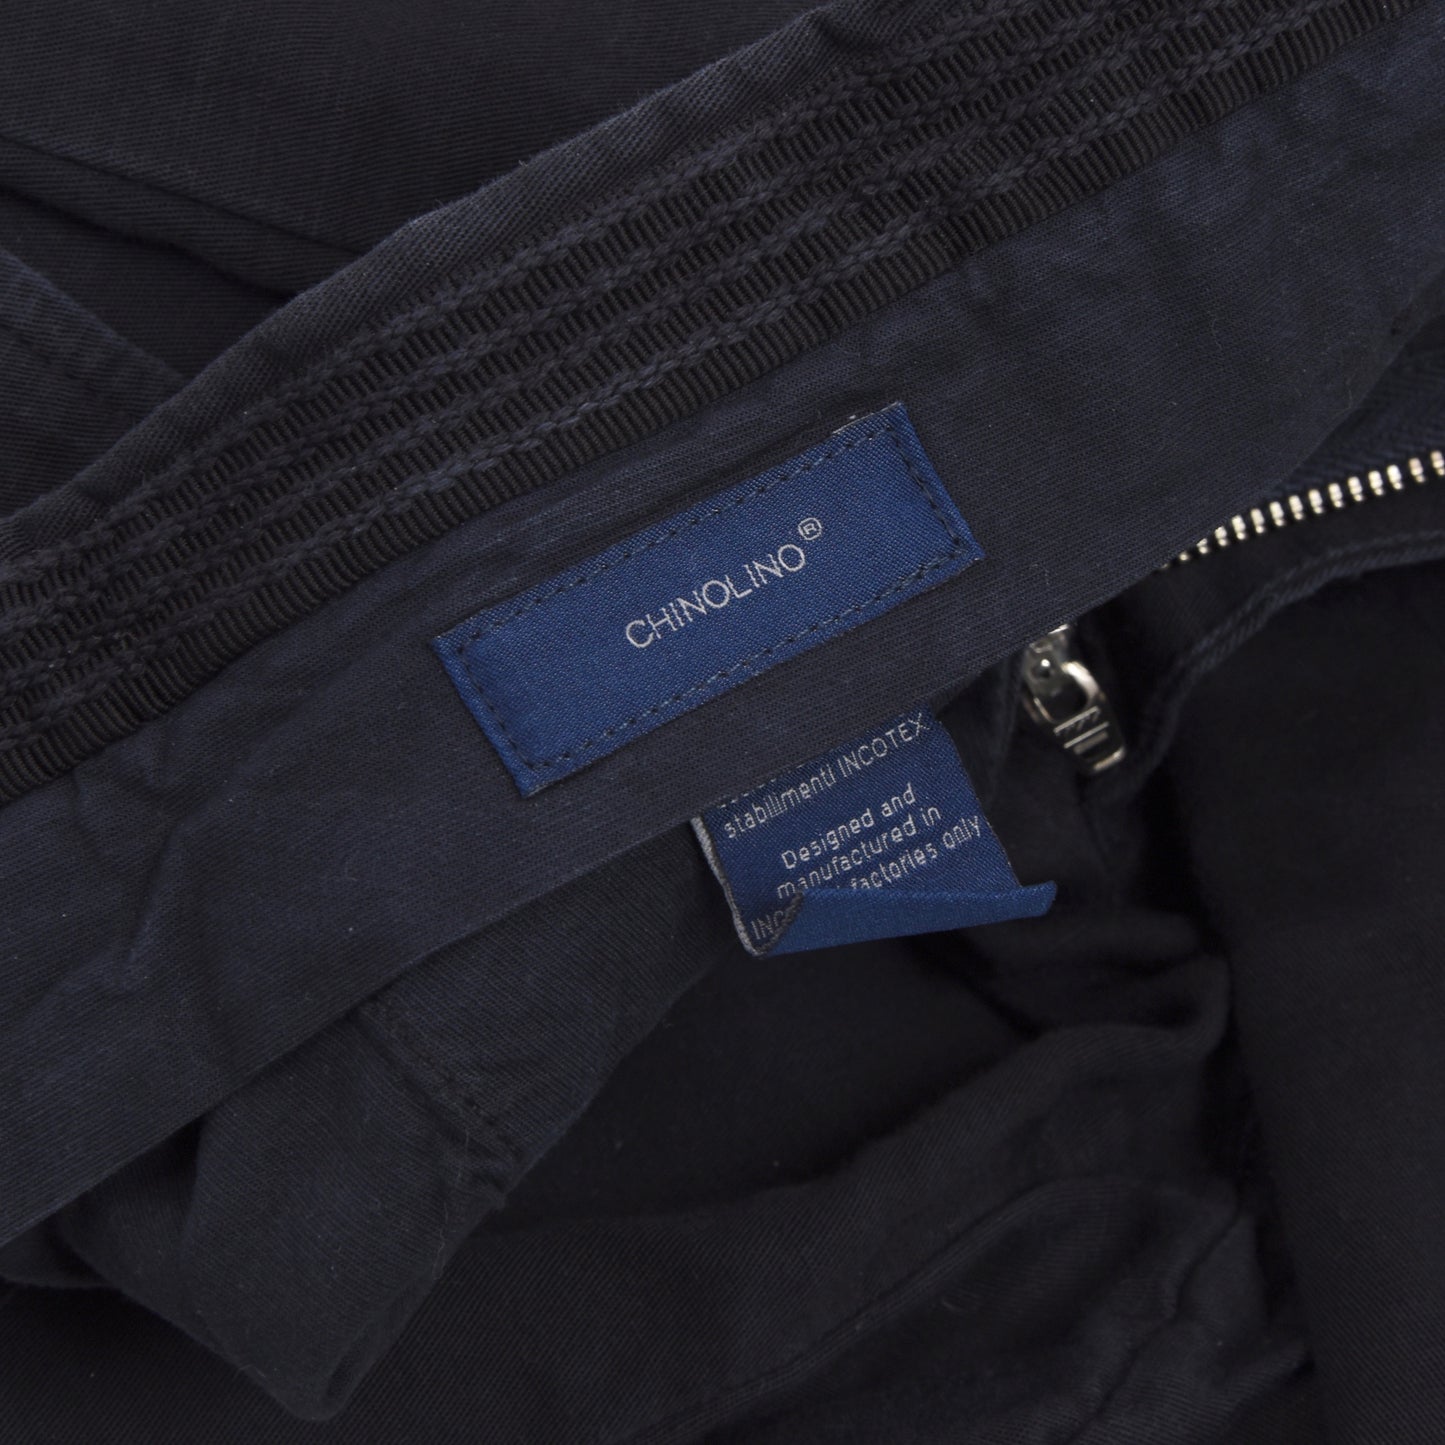 Incotex Chinolino Linen/Cotton Shorts Size 48 - Navy Blue